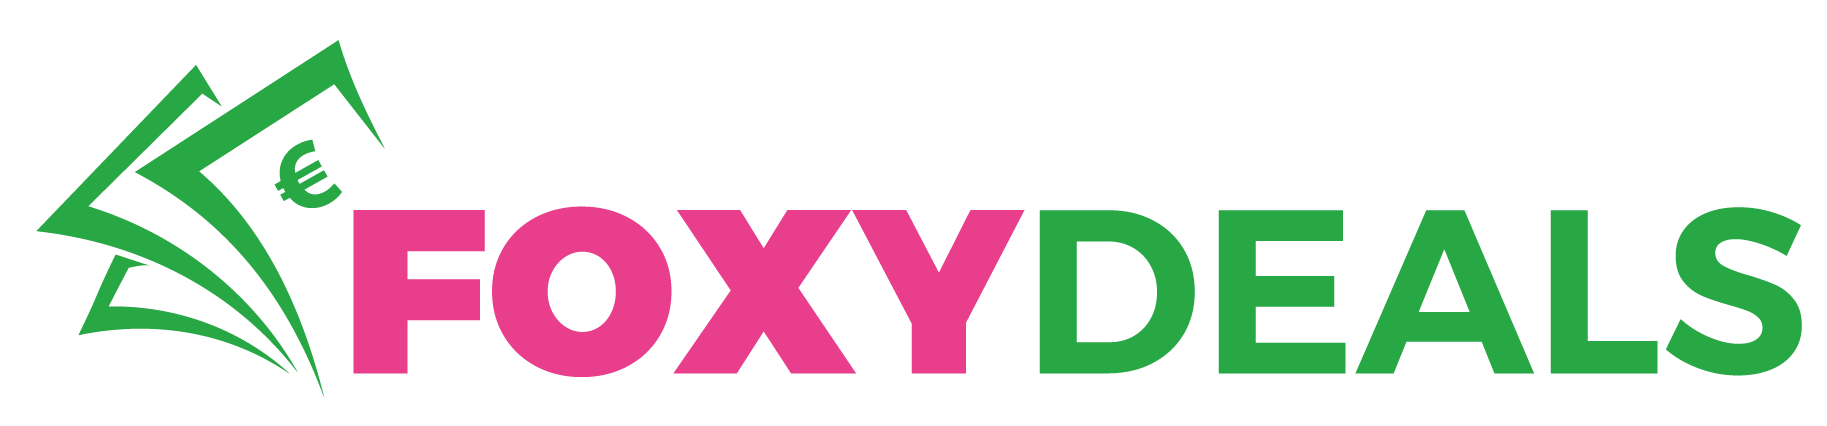 Foxydeals logo